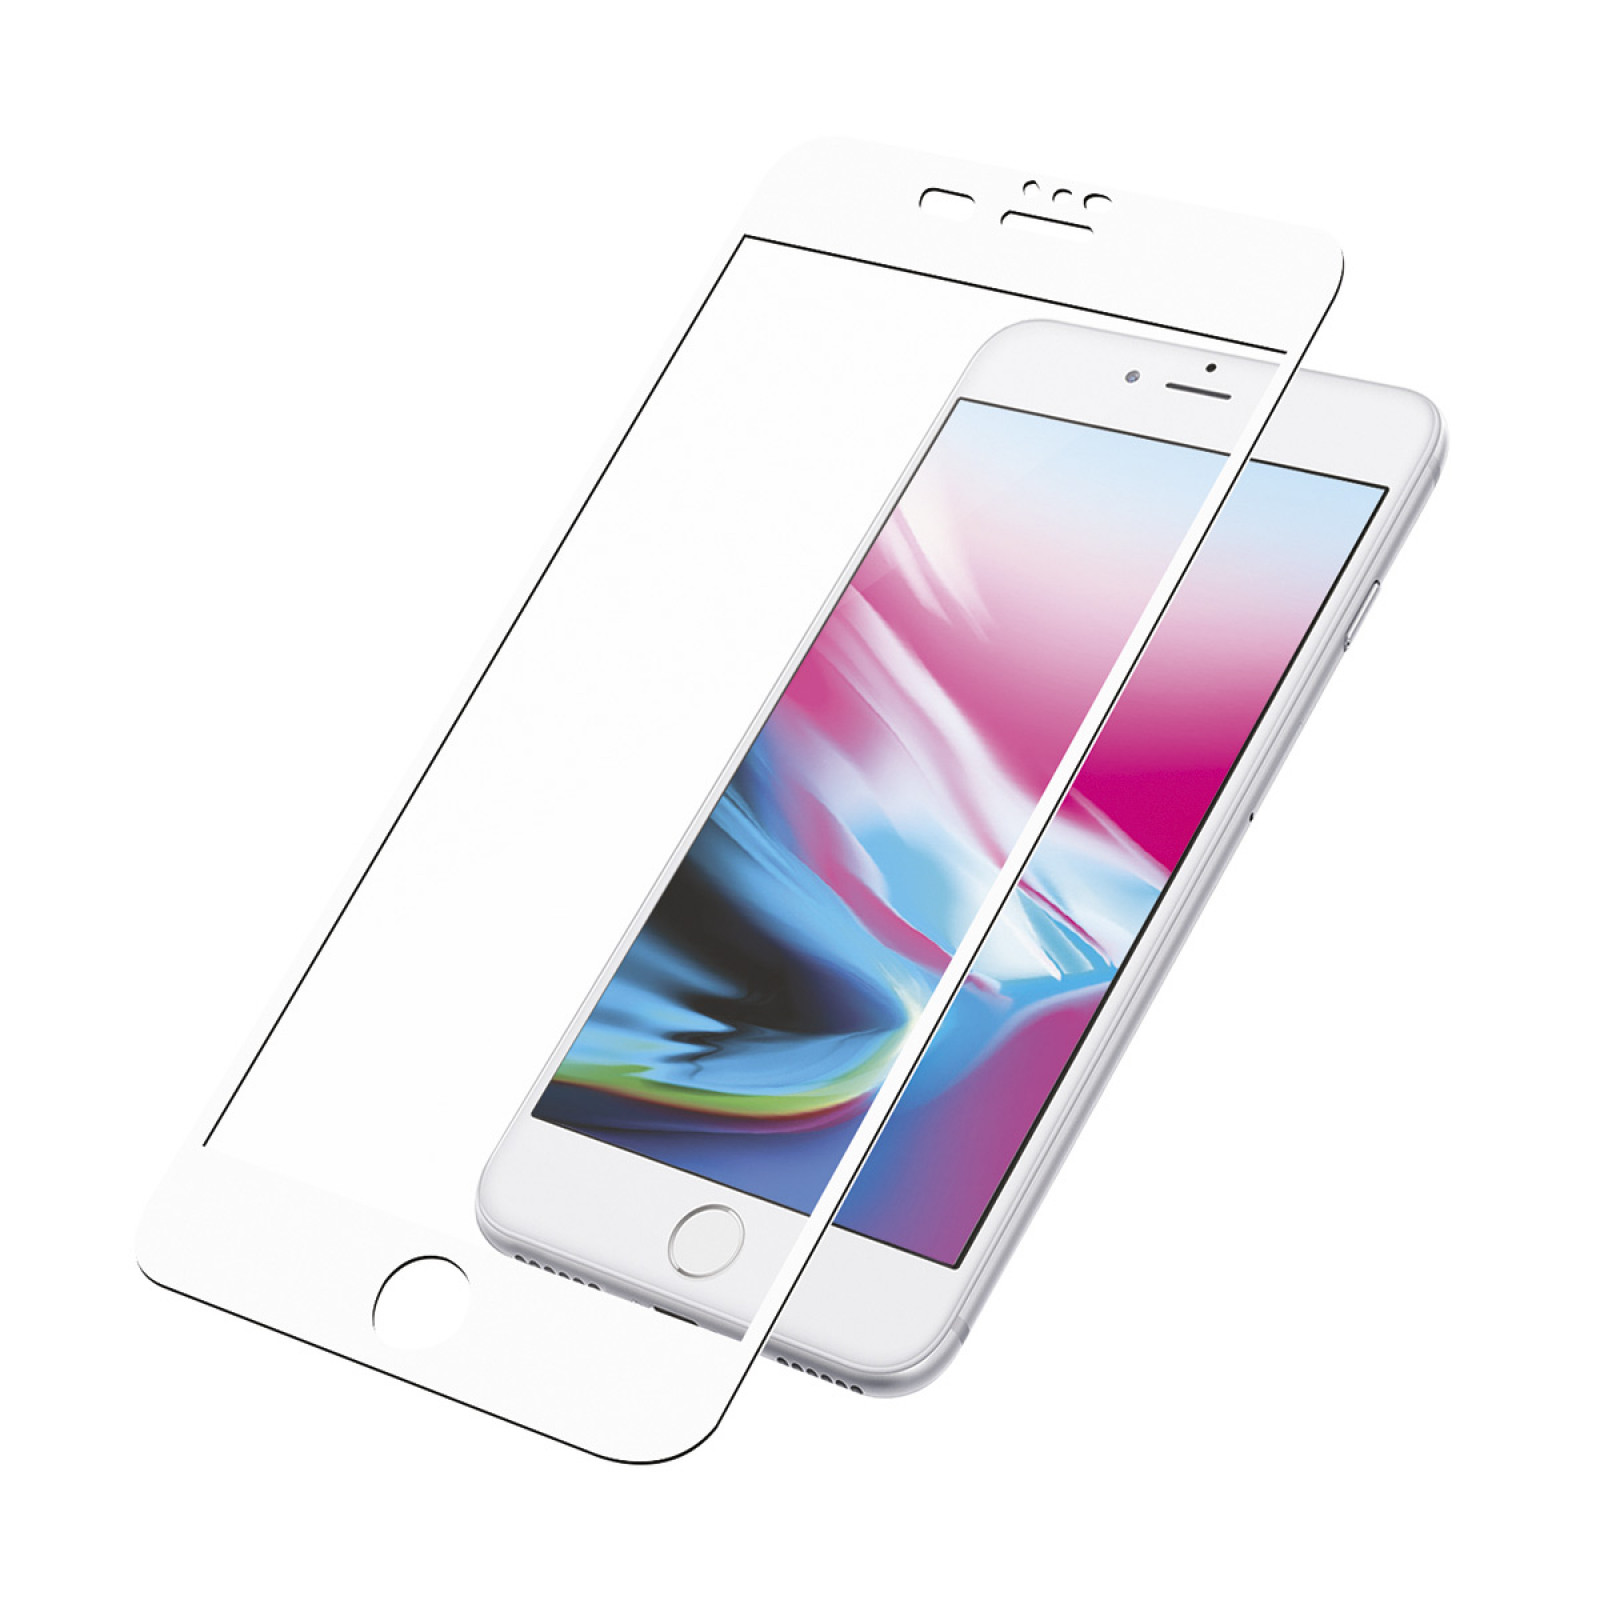 Стъклен протектор PanzerGlass за Apple iPhone 7 Plus/8 Plus Case Friendly Бял